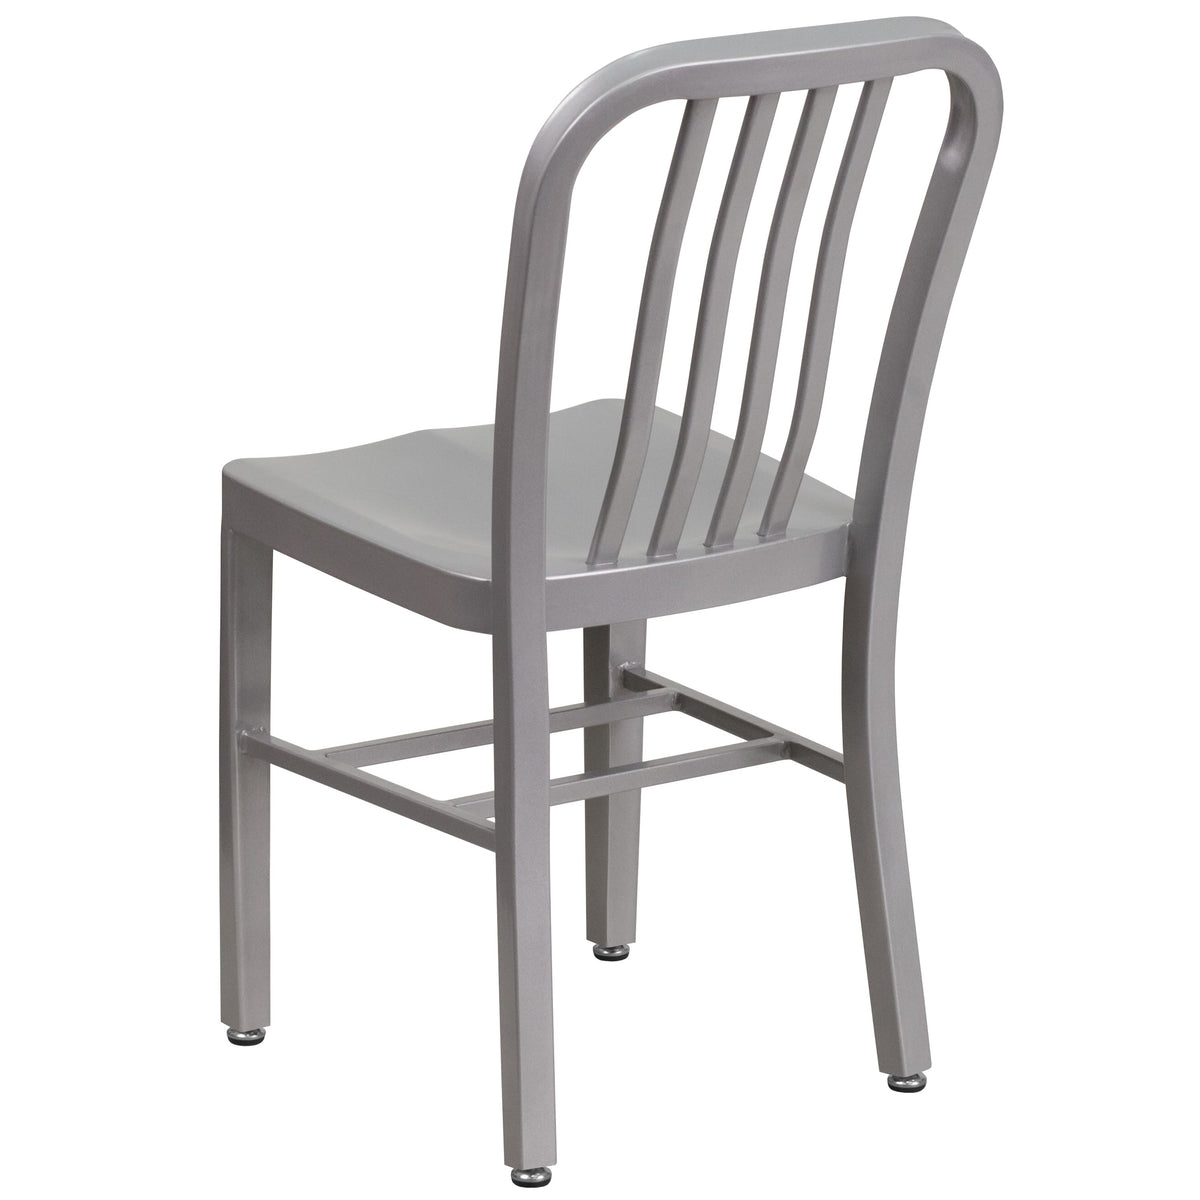 Silver |#| Silver Metal Indoor-Outdoor Chair - Kitchen Chair - Restaurant Seating